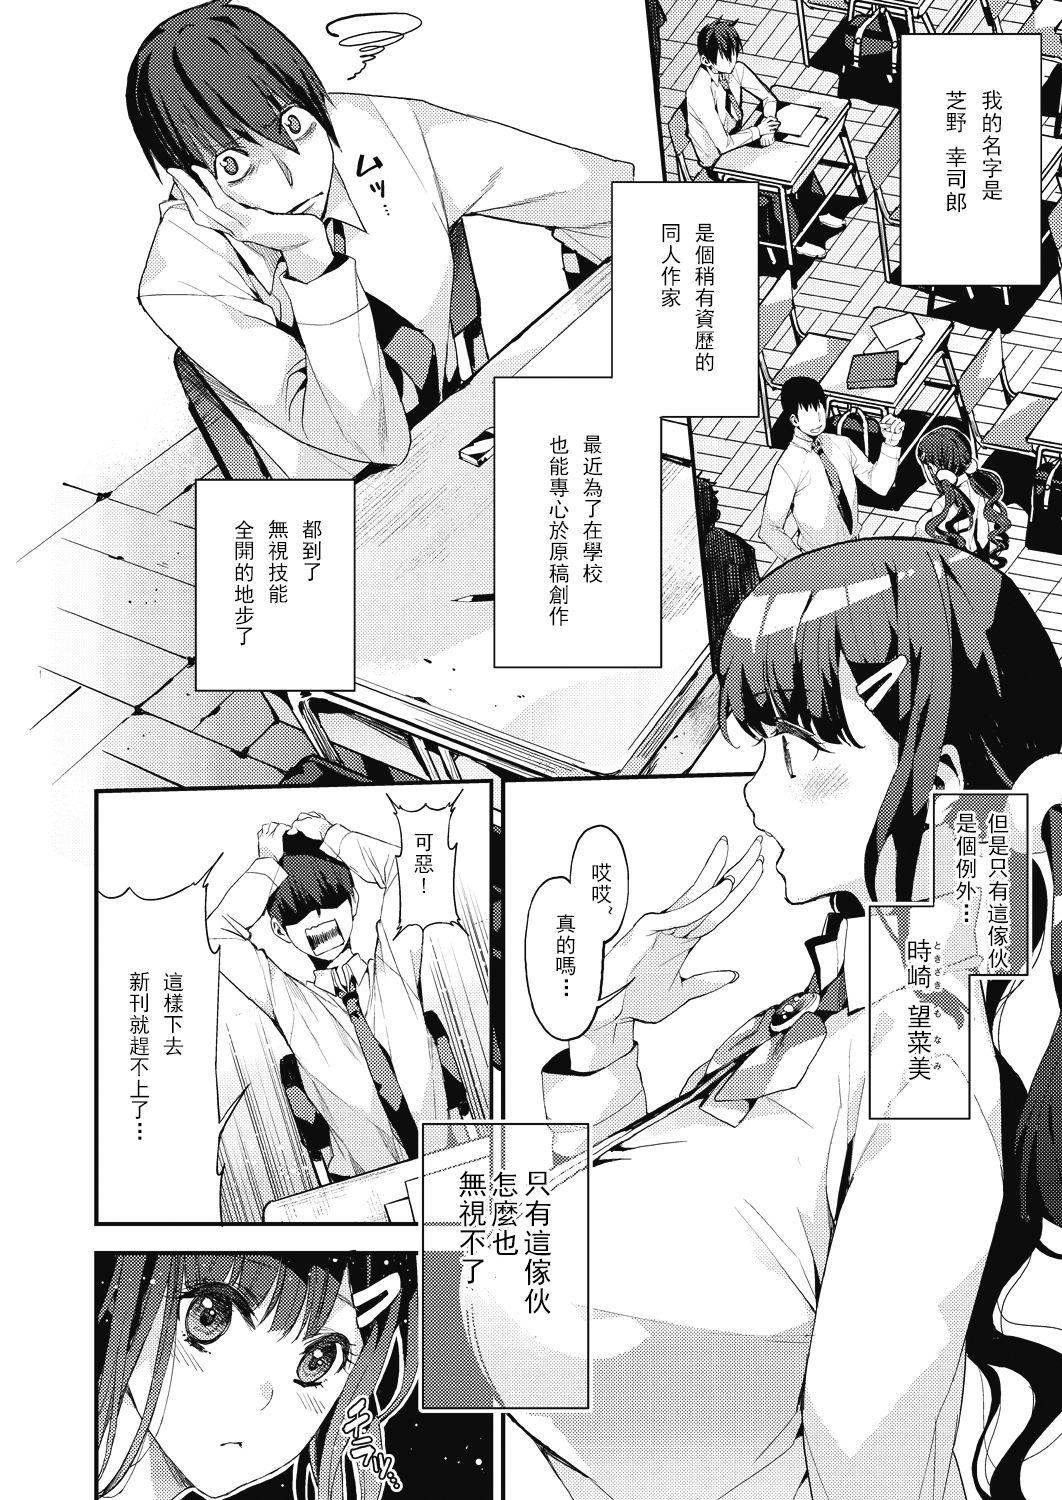 Analfucking mutsumajii fan Siririca - Page 3